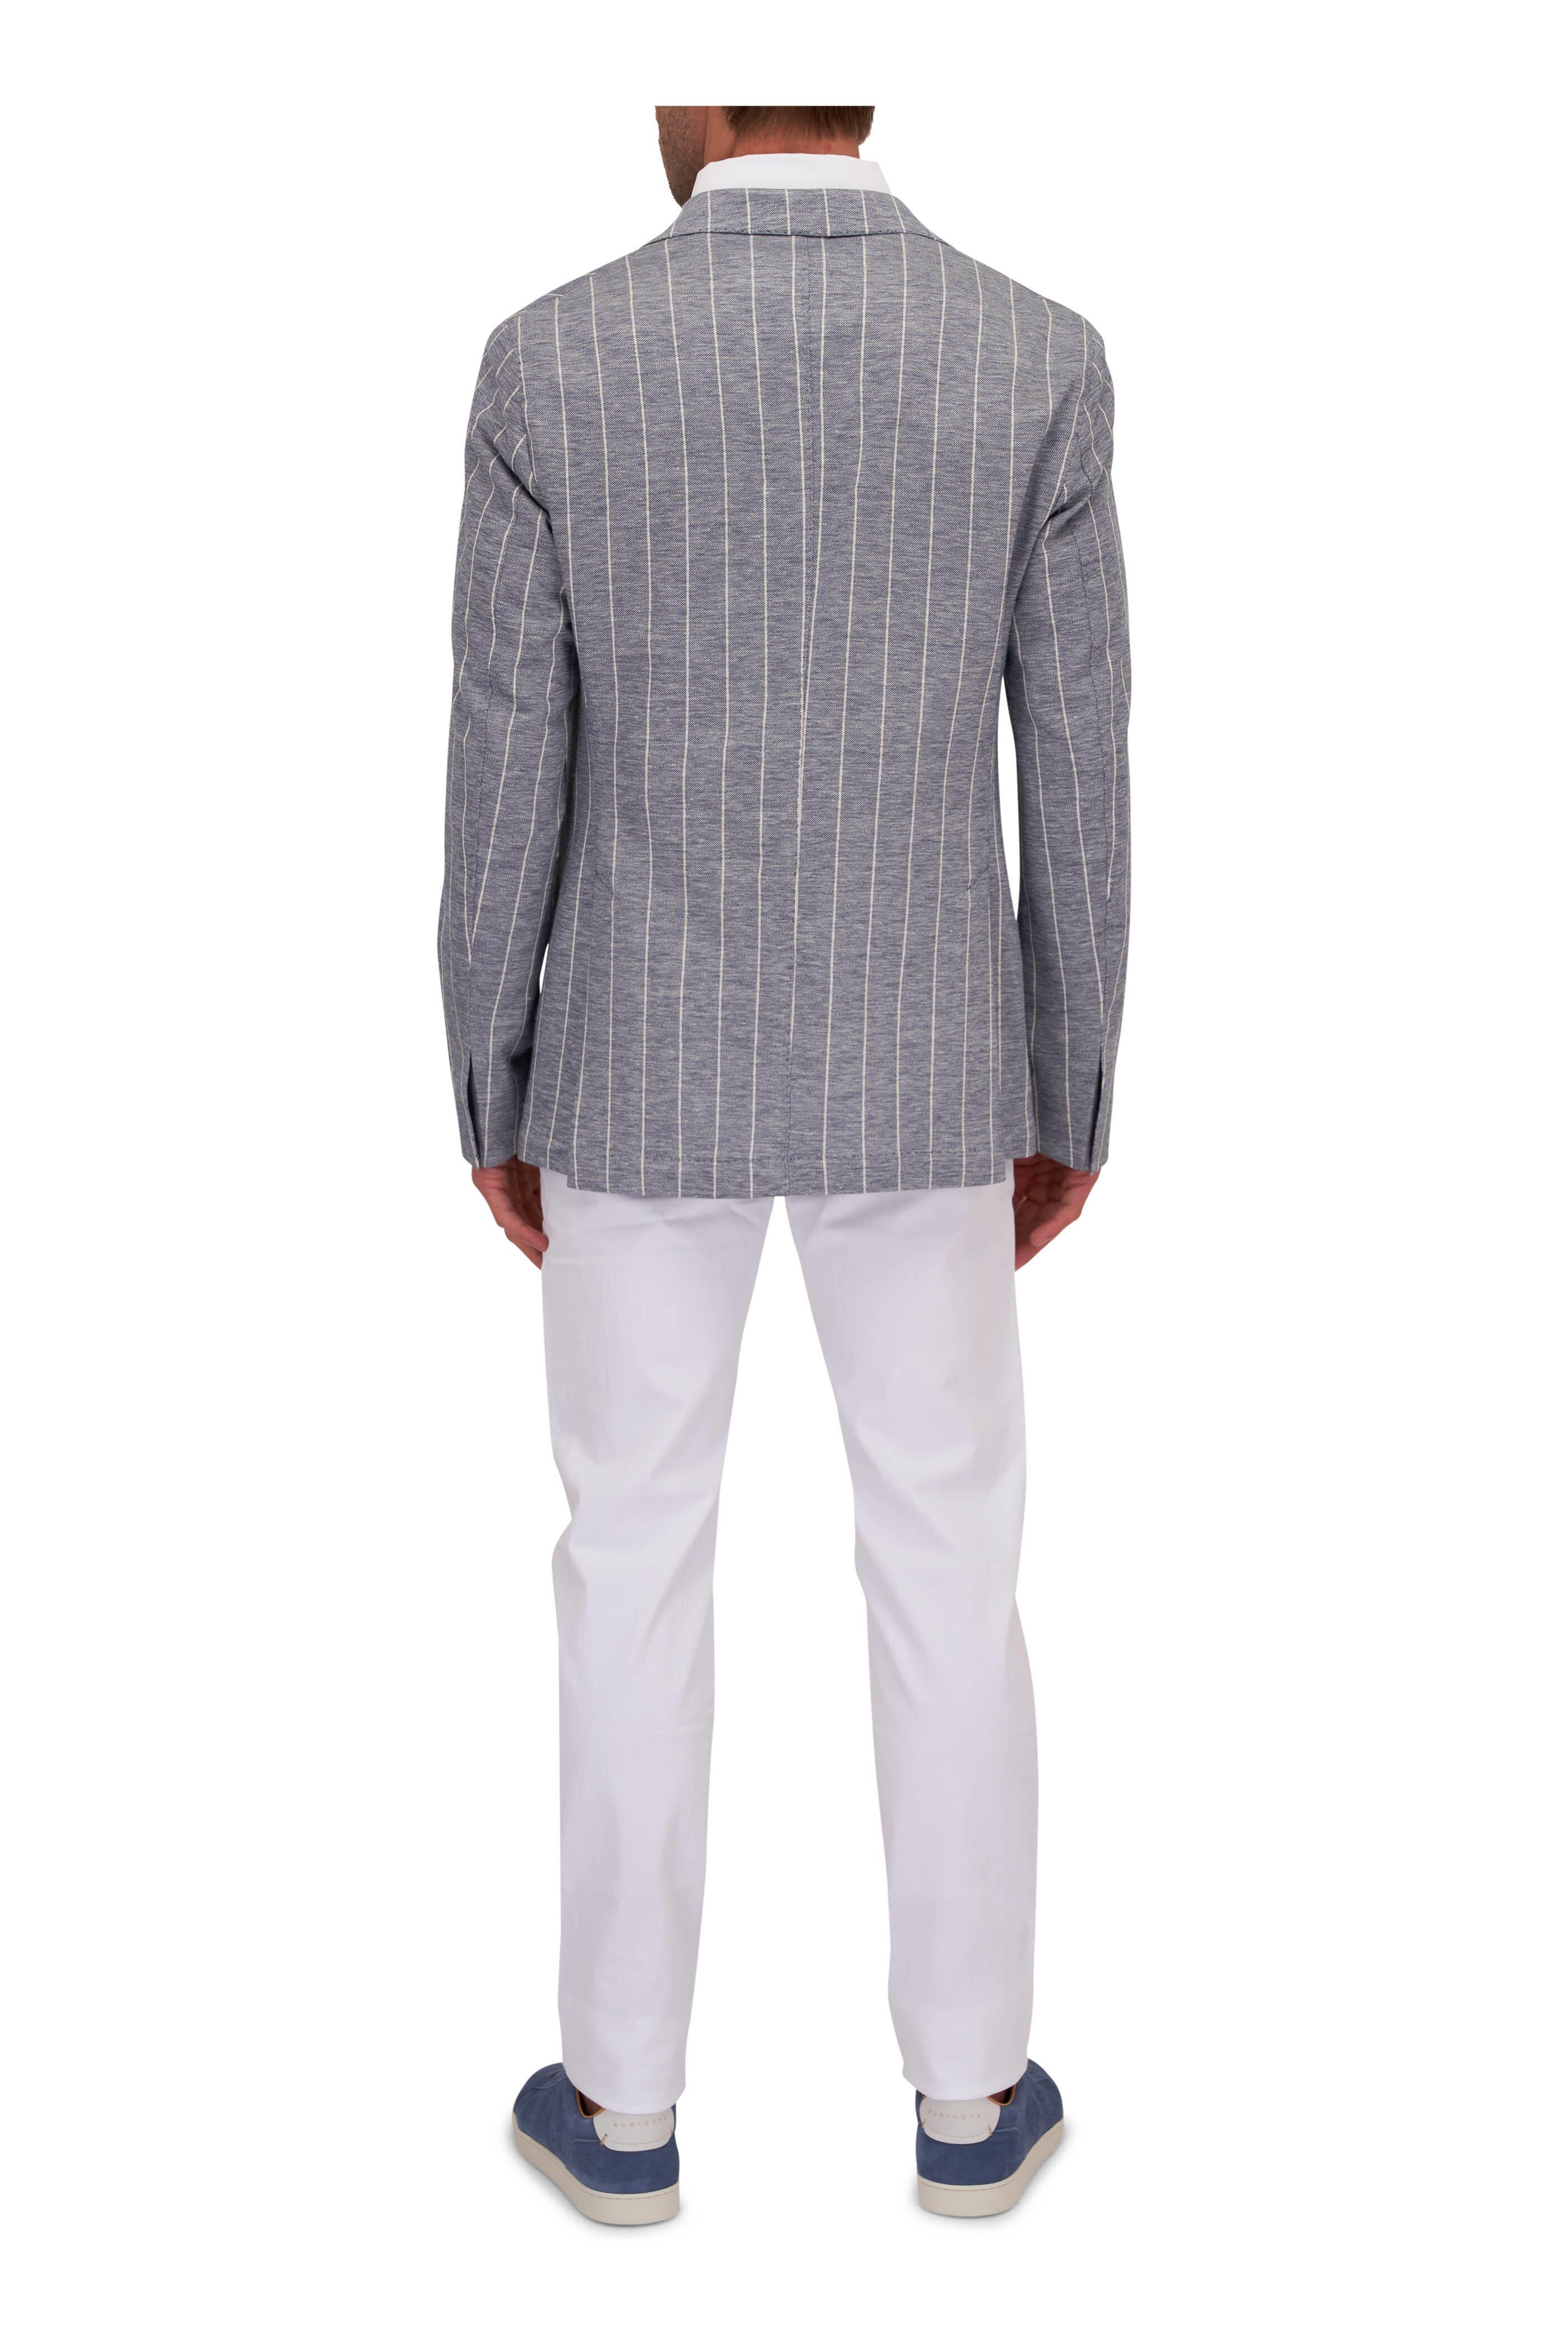 L.B.M. 1911 - Blue & White Striped Linen & Cotton Sportcoat